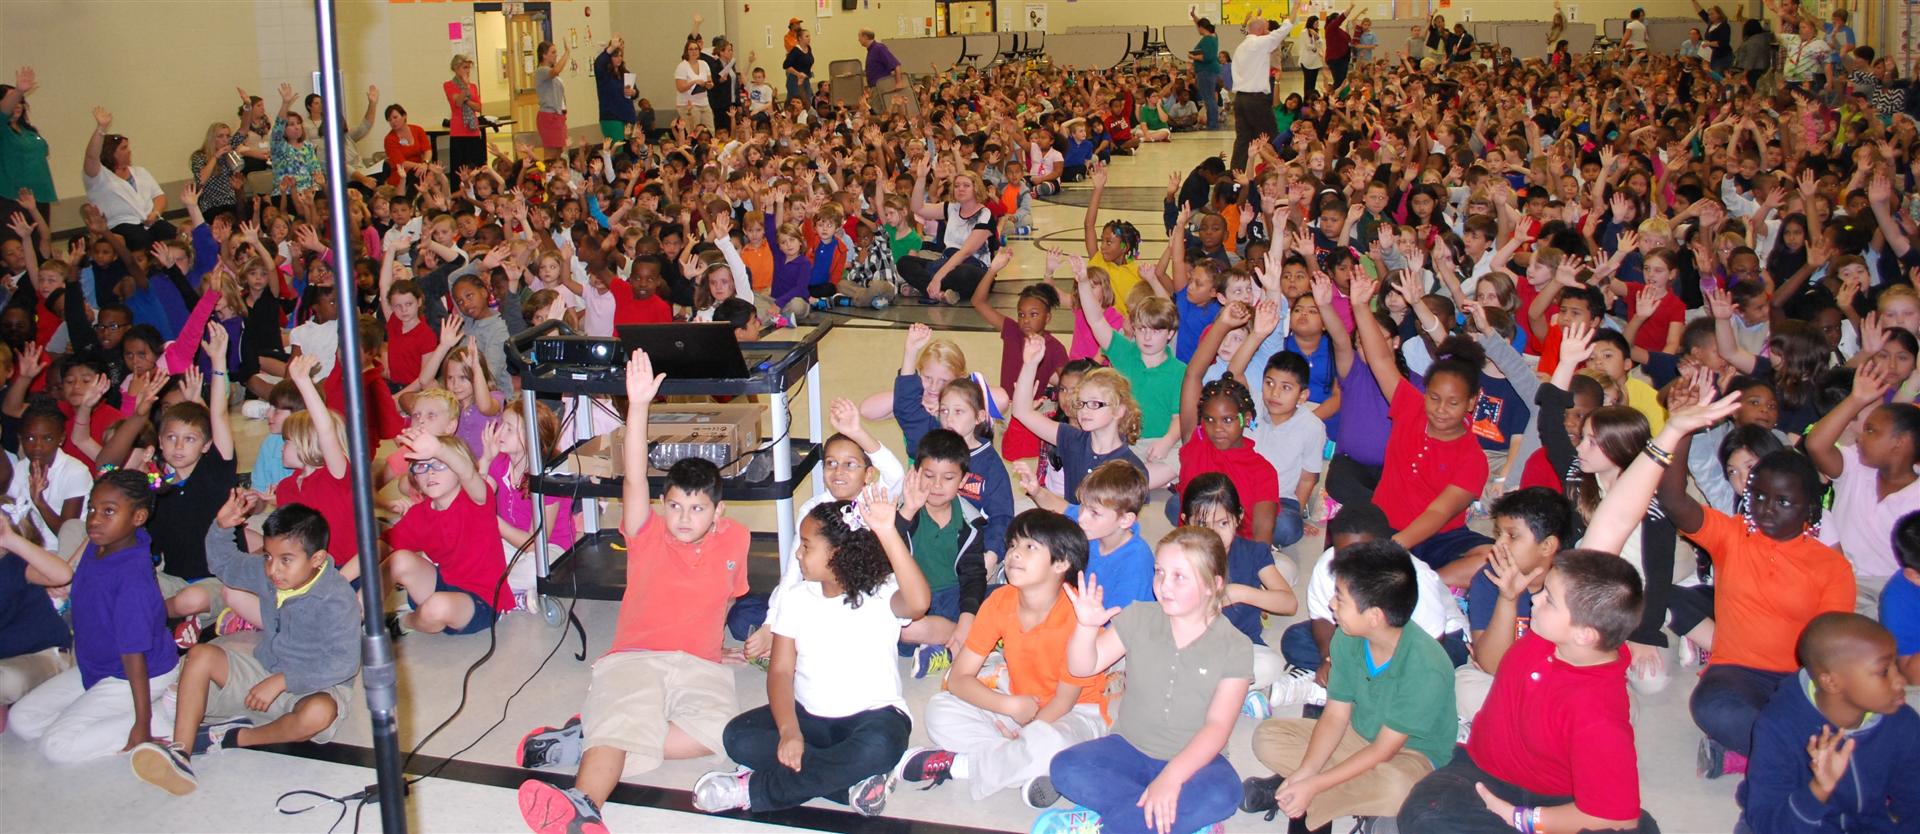 East Ridge Elementary School: Highlights - ERES Leadership SHINE Initiative